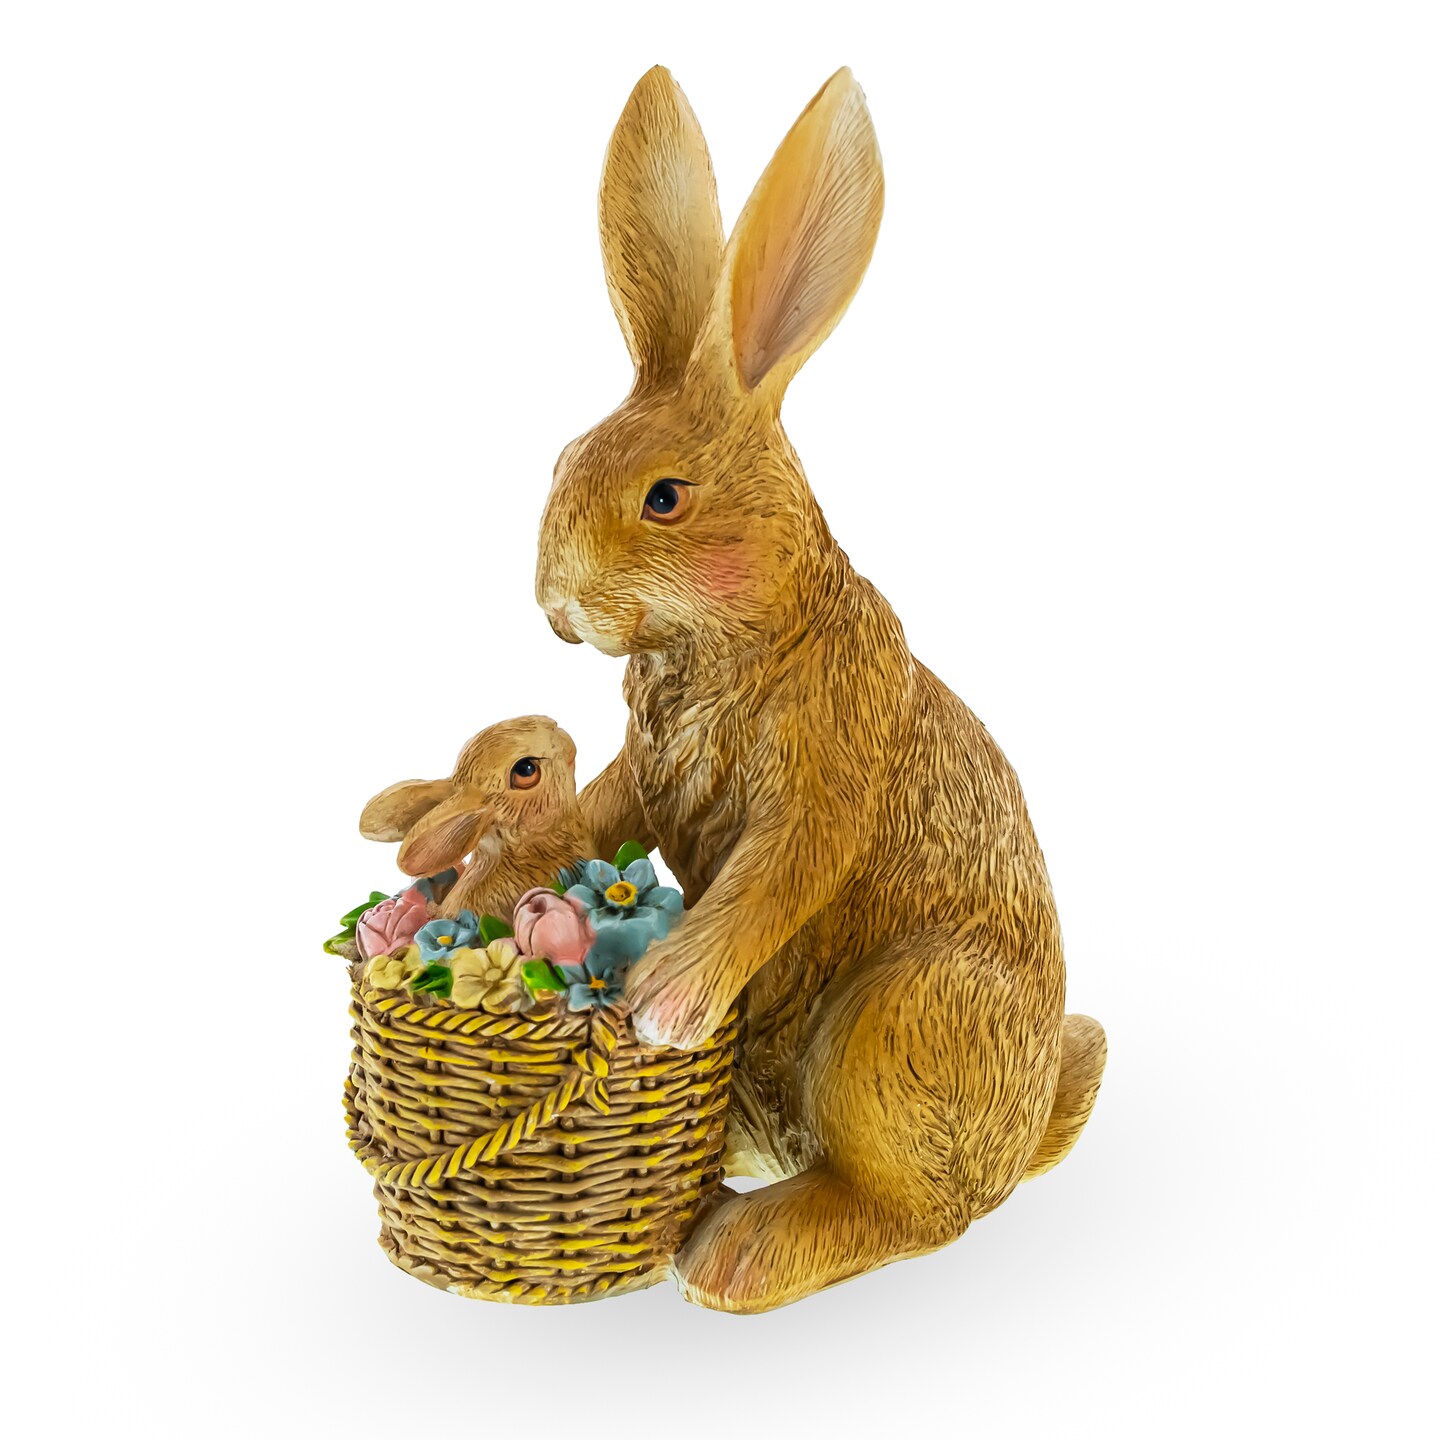 Cherished Embrace: Mother Bunny Cradling a Little One in Floral Basket Figurine